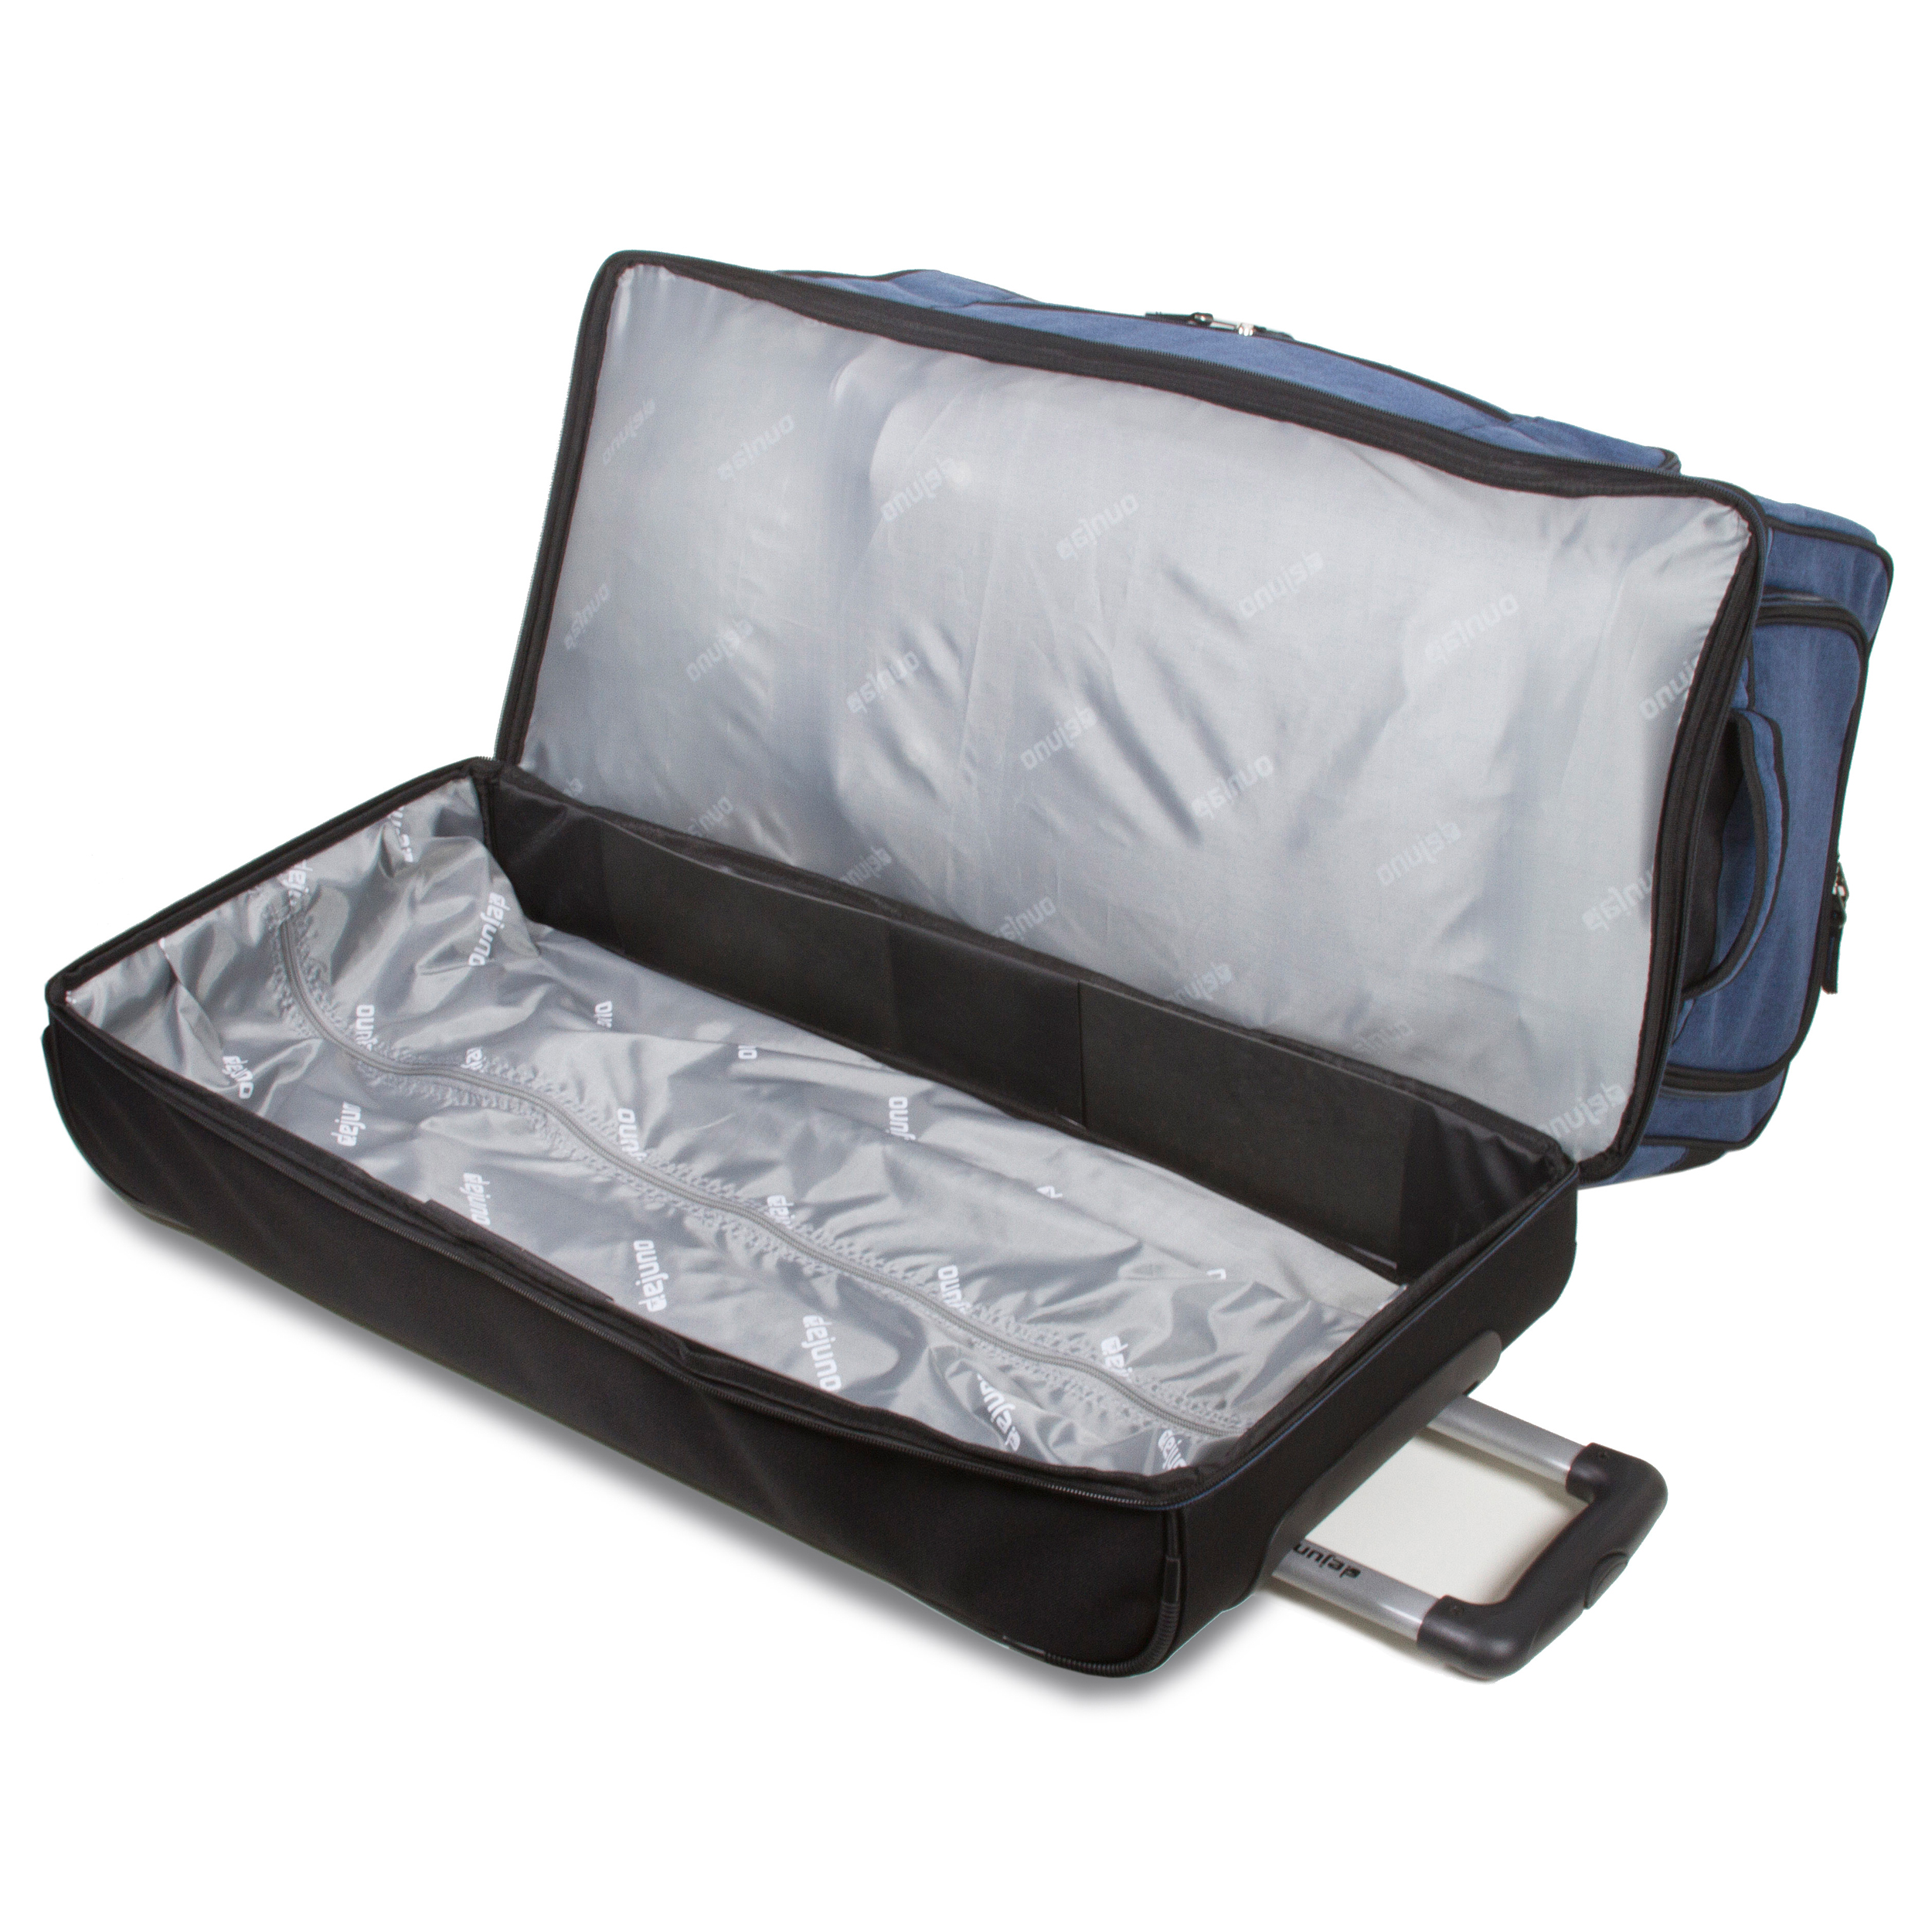 Dejuno 28-inch Lightweight Denim Drop Bottom Rolling Duffel Bag - Blue - image 3 of 4